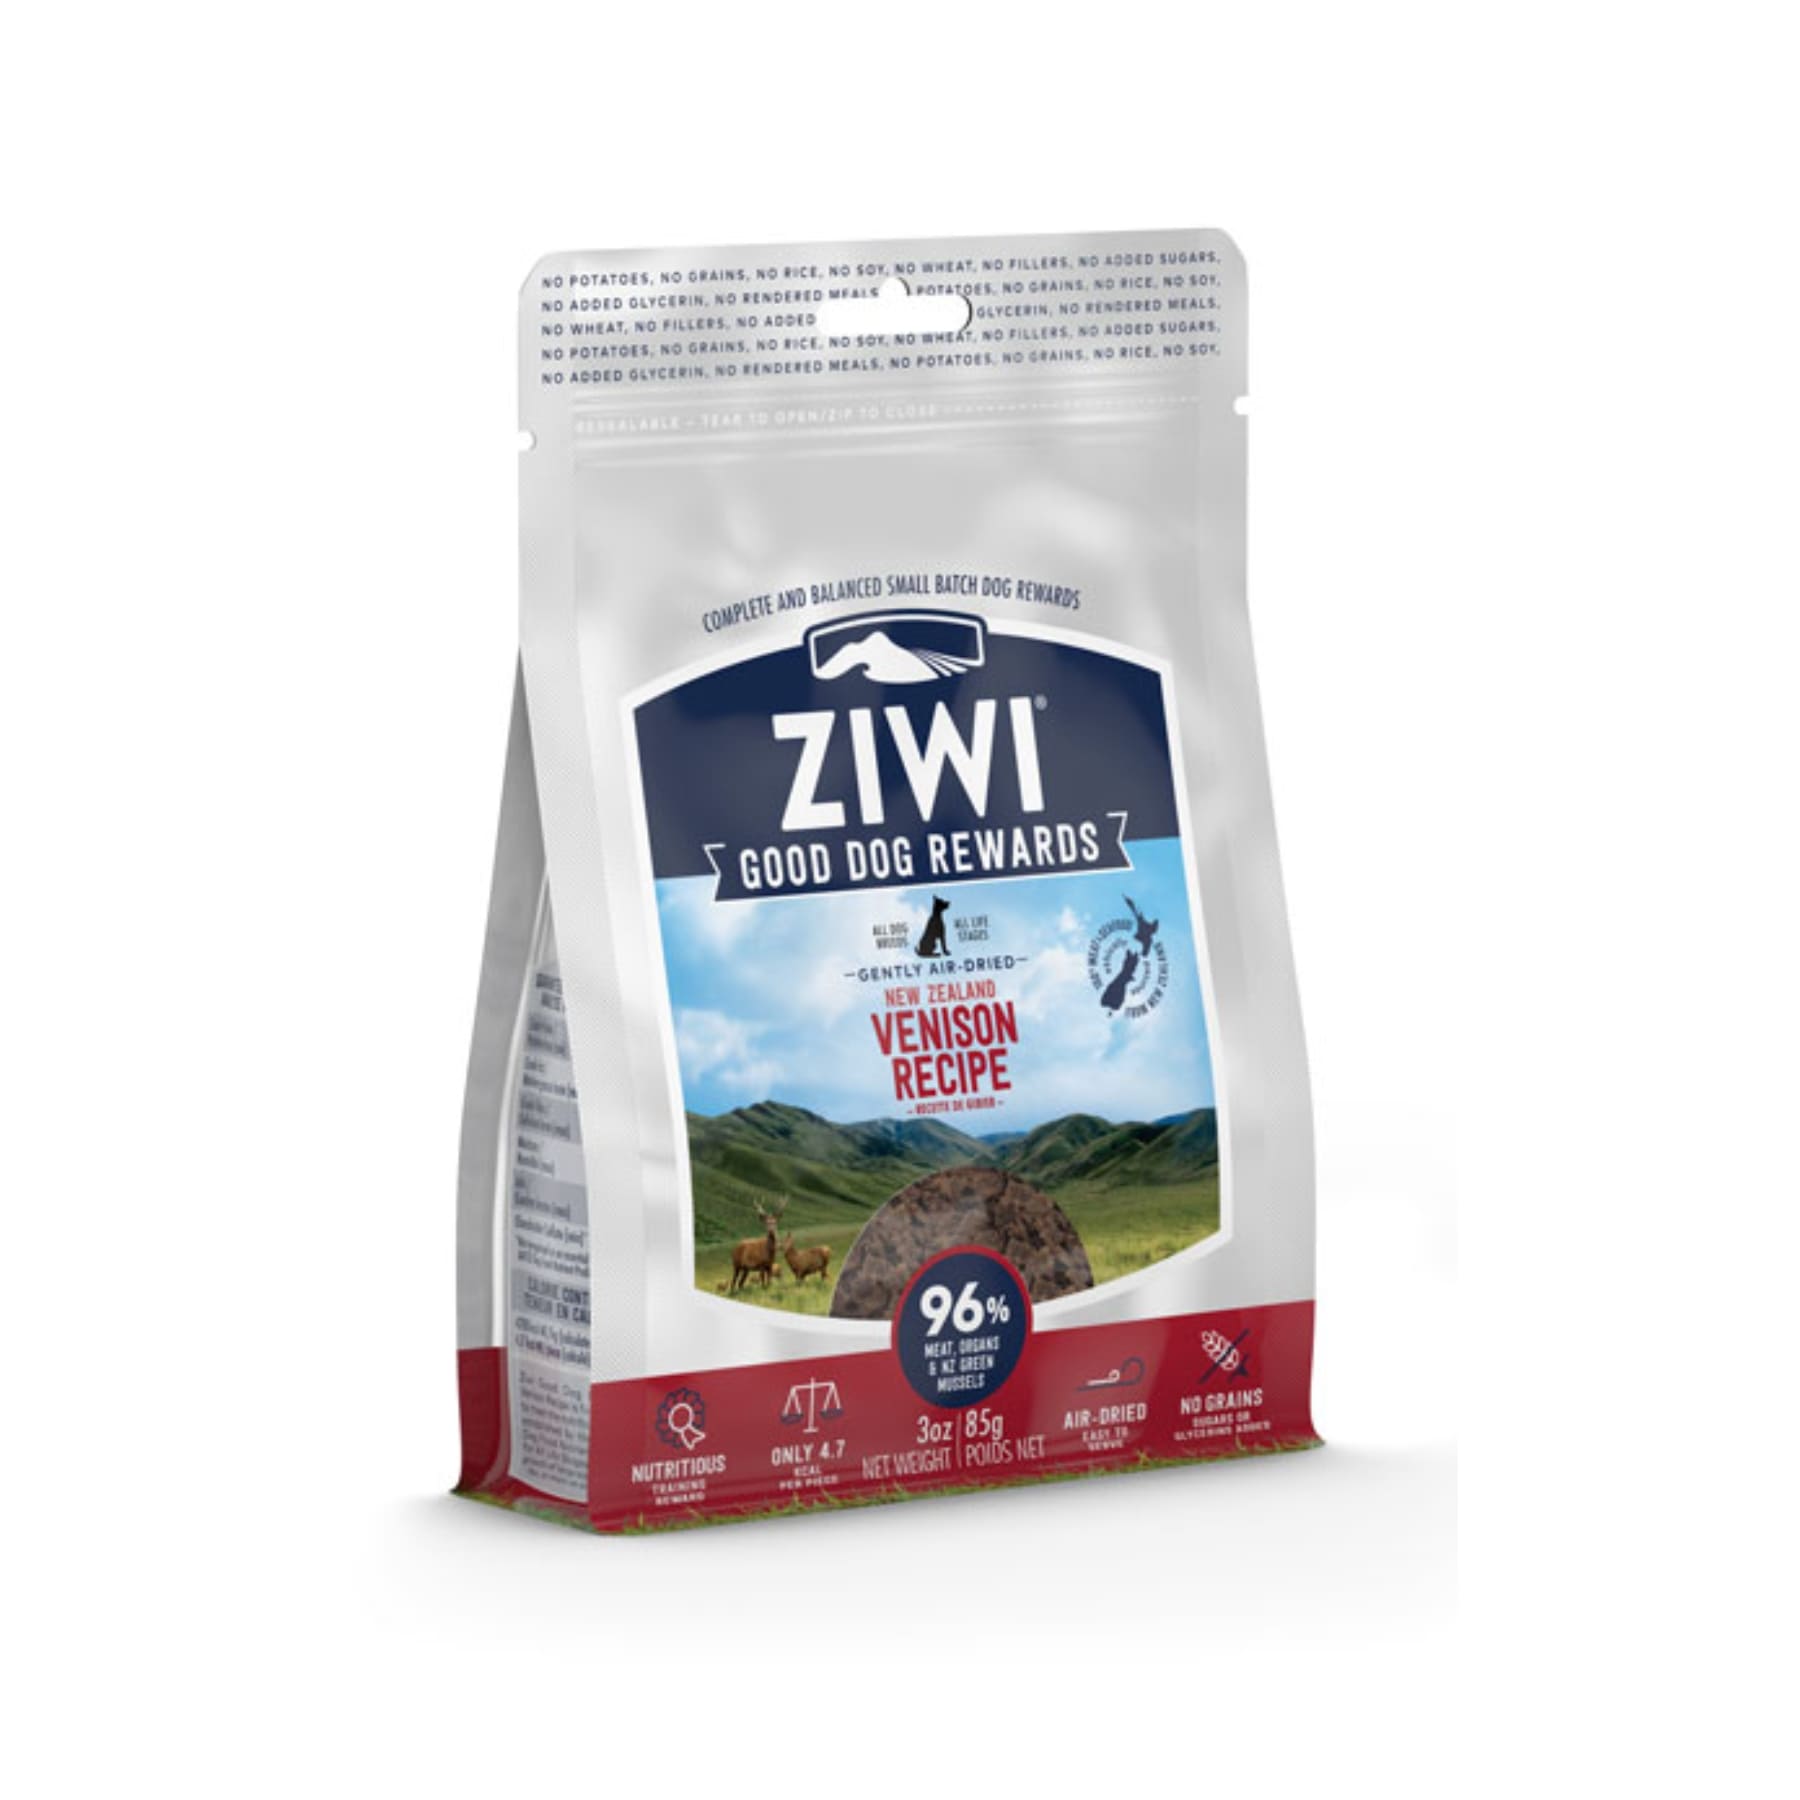 ZIWI Peak Good Dog Rewards Venison Recipe 85g. Premium Dog Treats.